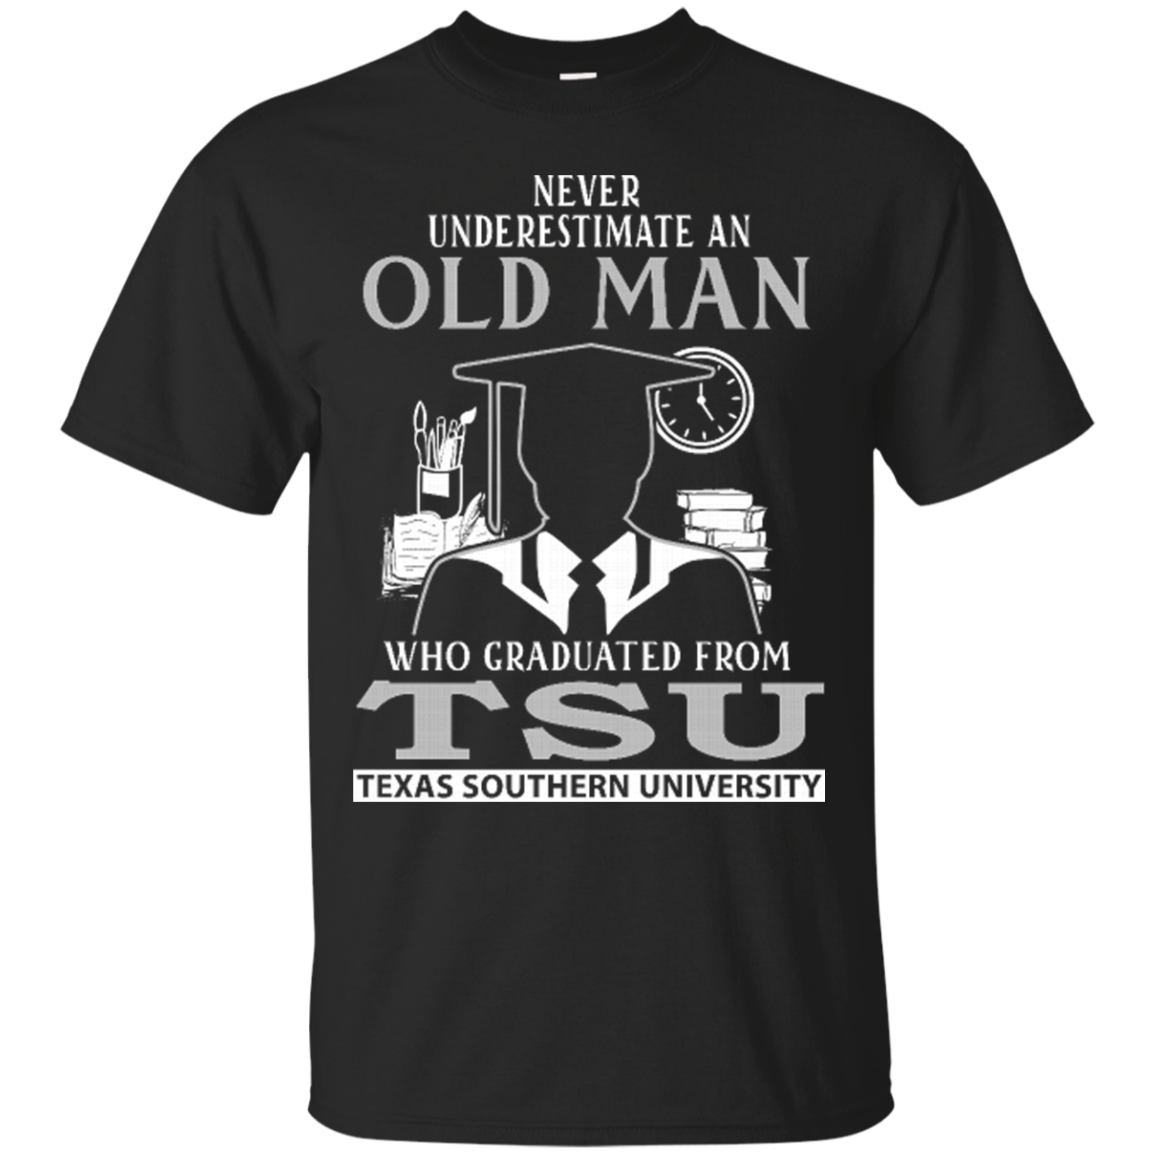 Texas Southern University Graduate Man Shirts - Teesmiley